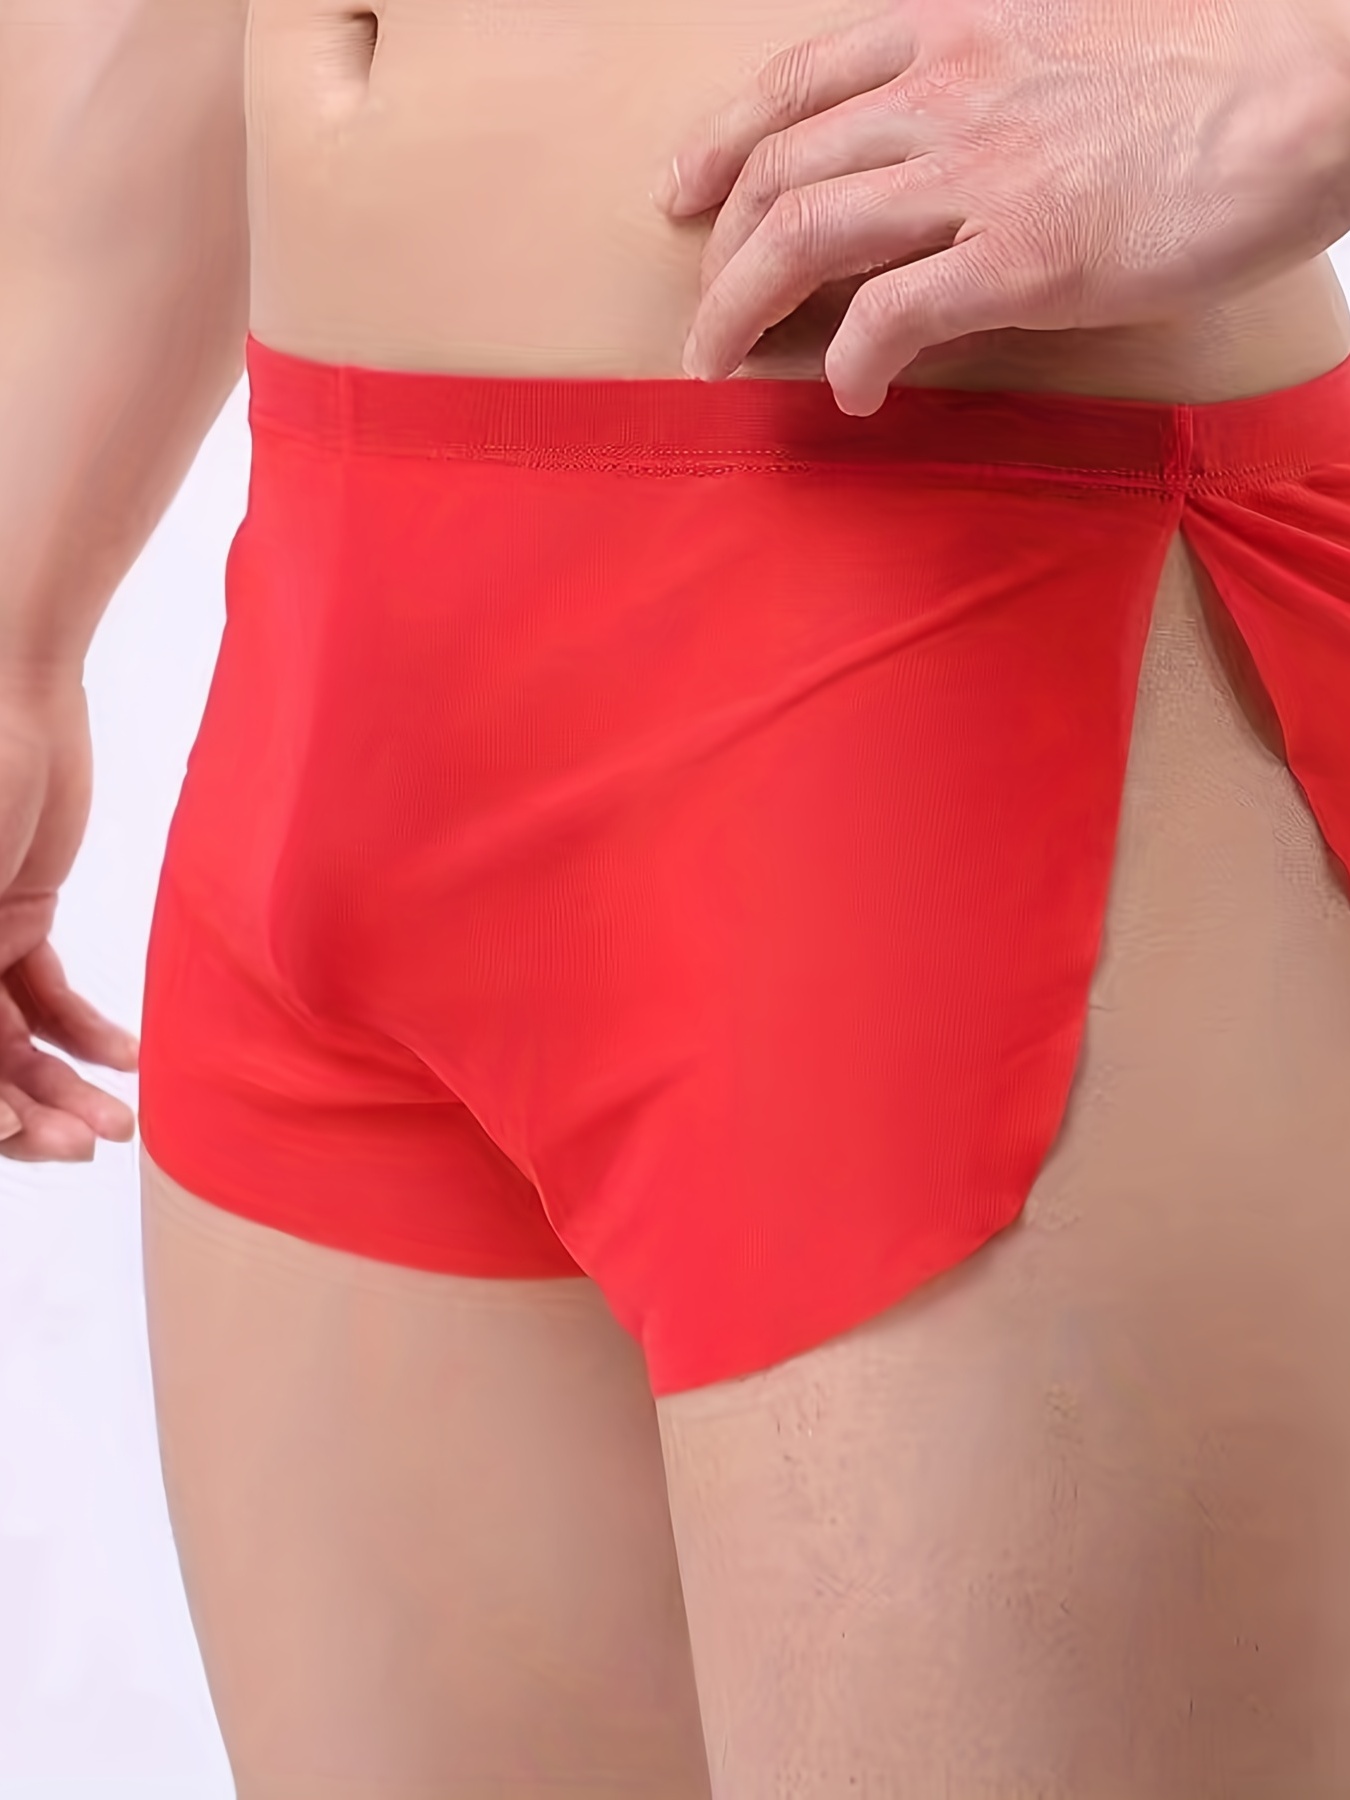 US Mens Shorts See Through Boxer Briefs Sheer Mesh Loose Lounge Underwear  Shorts